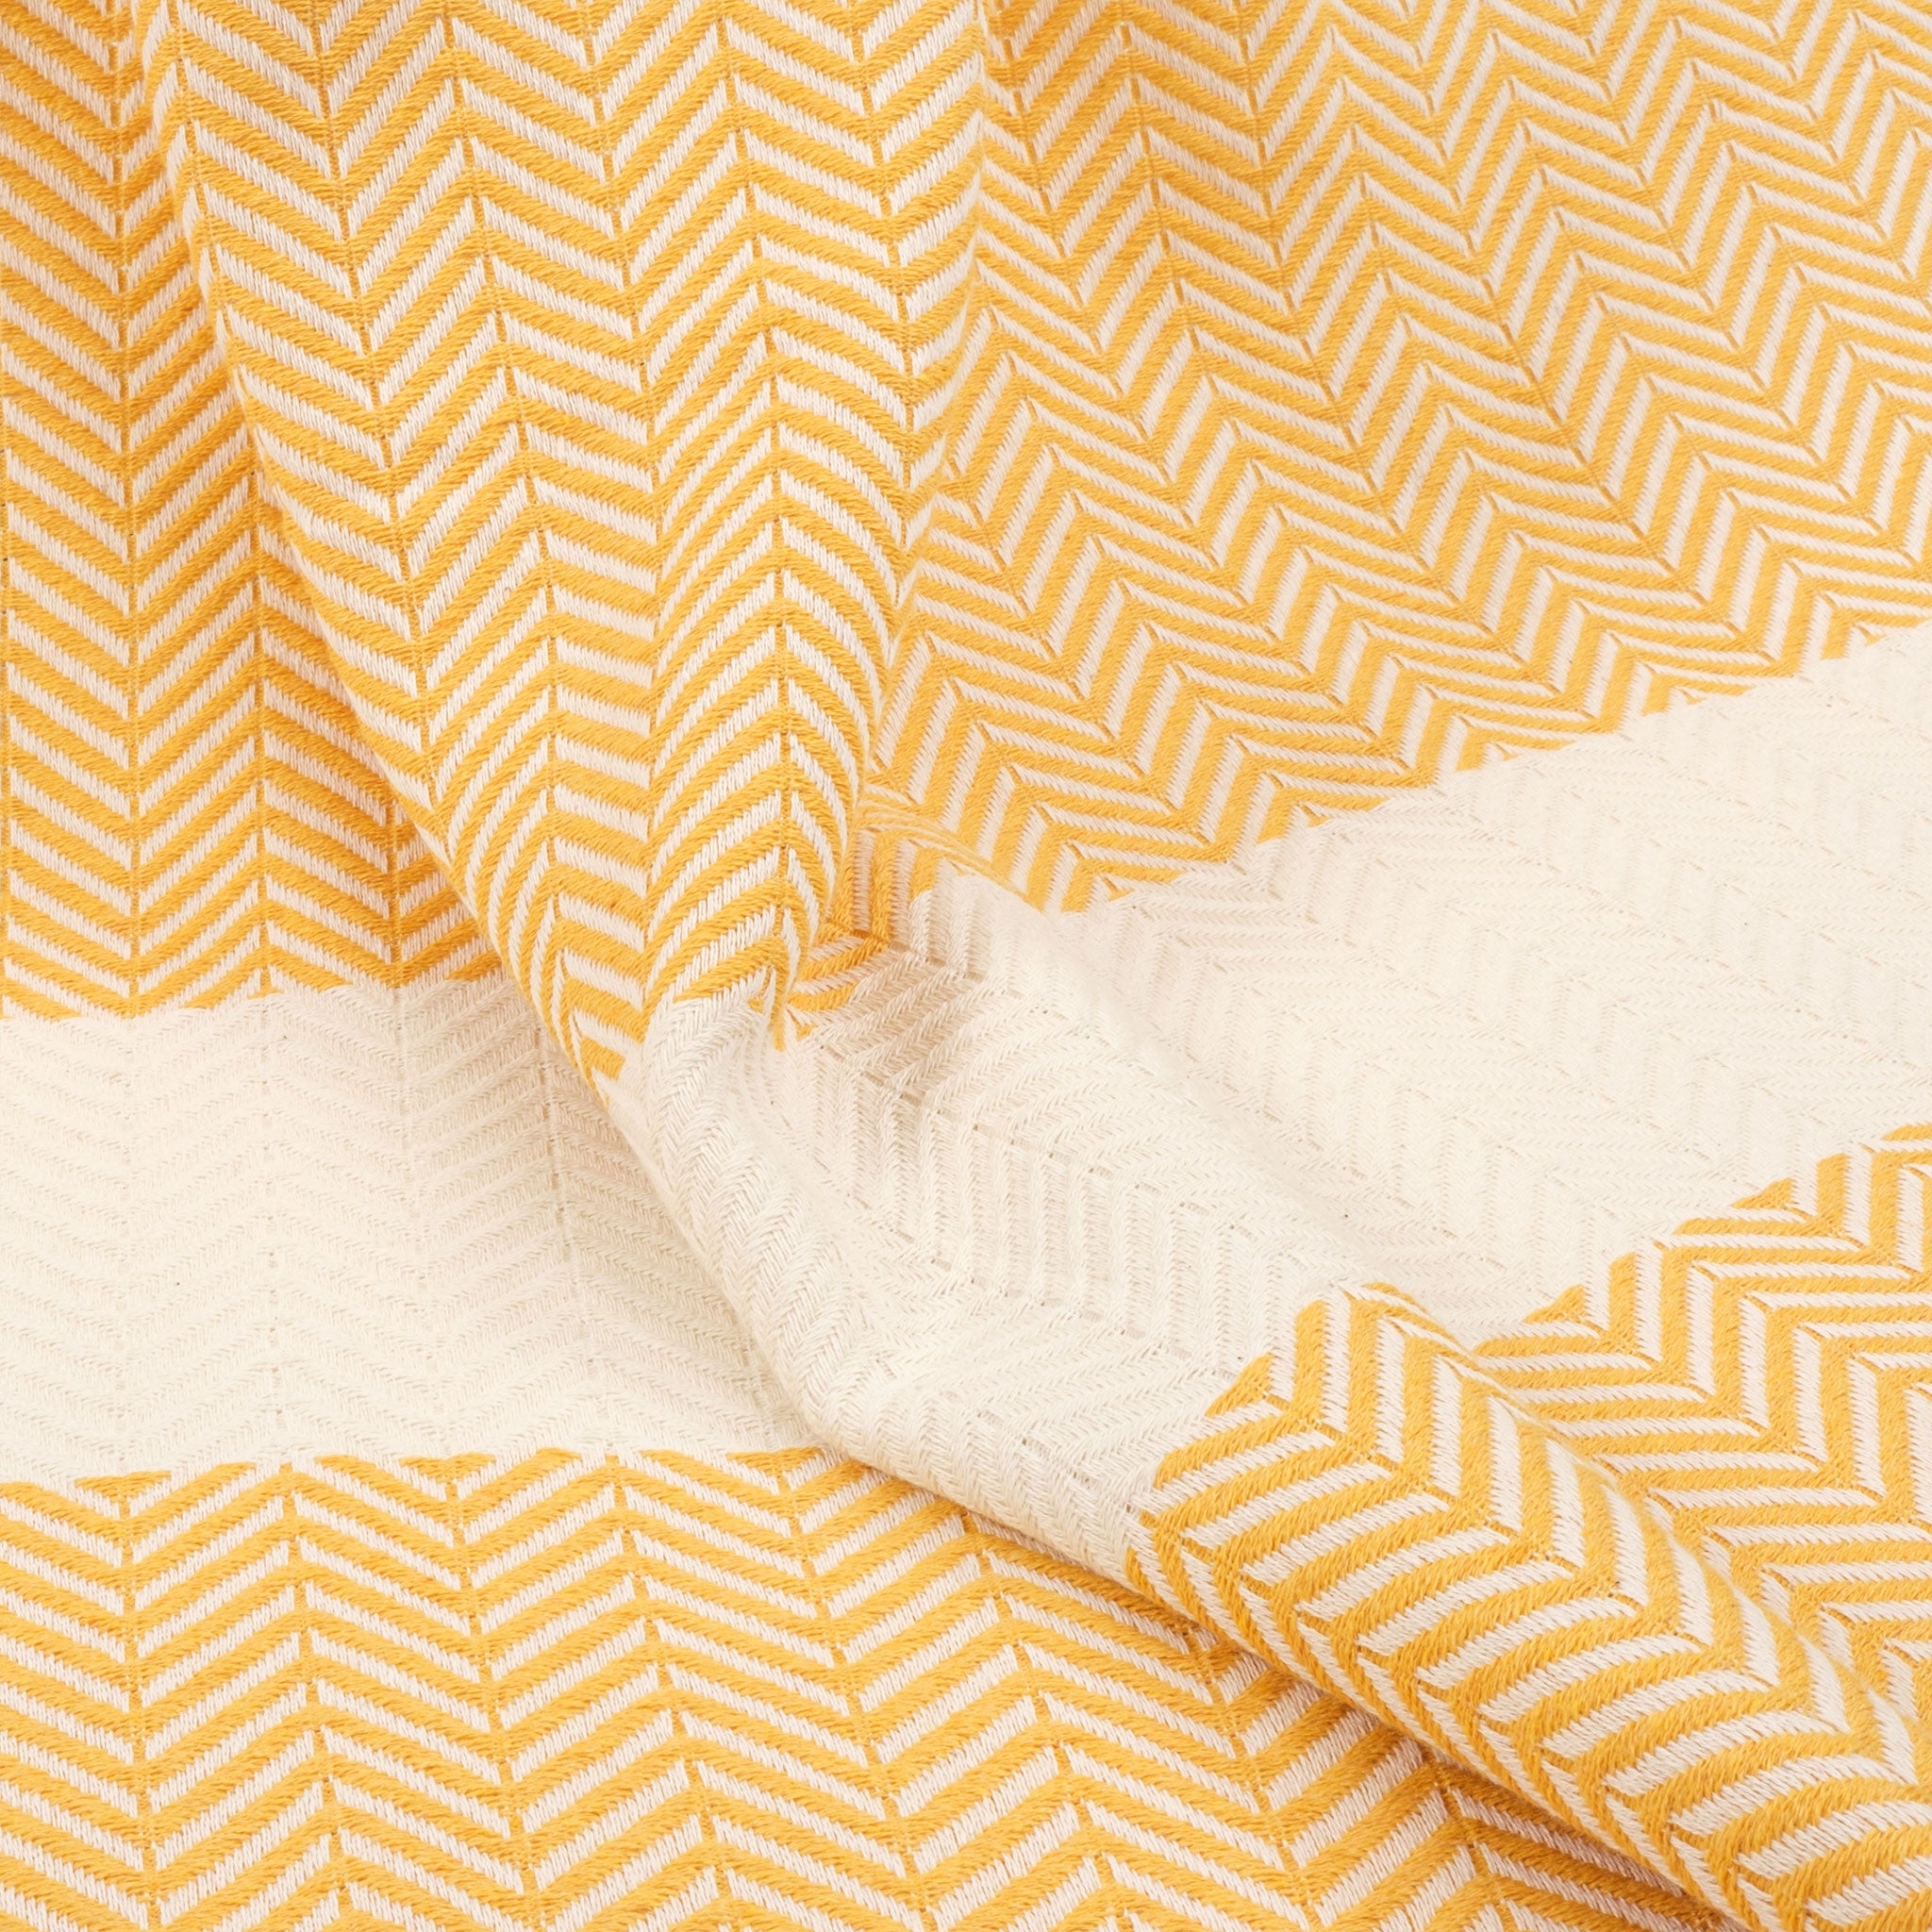 American Soft Linen - 100% Cotton Turkish Peshtemal Towels 40x70 Inches - Yellow - 2